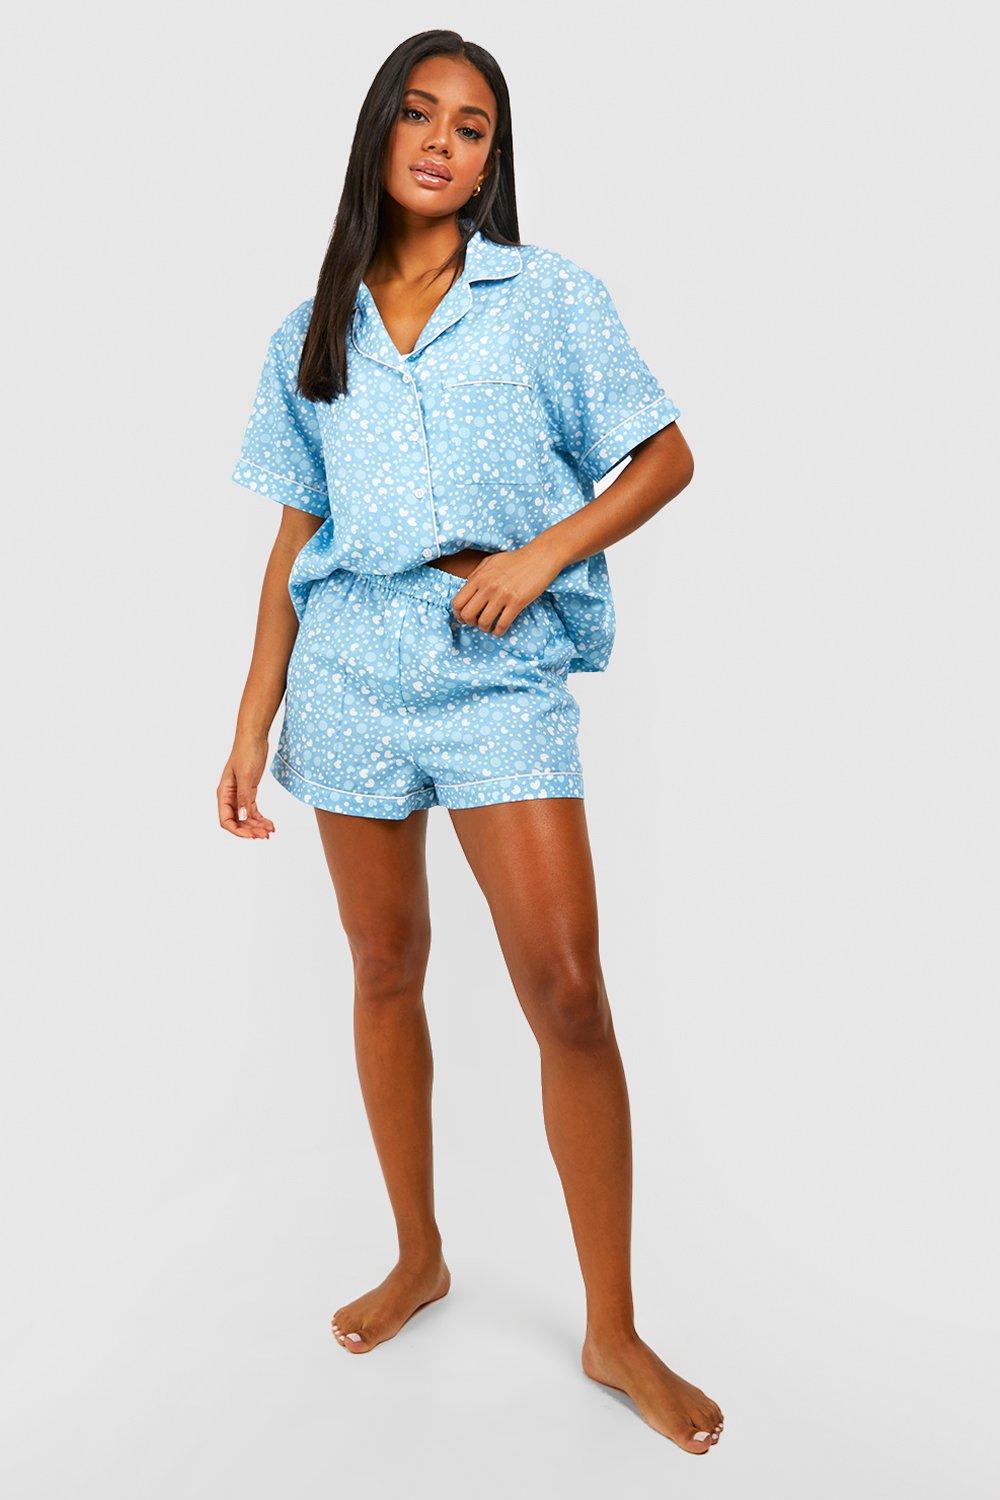 Maternity Star Print Pants Pajama Set